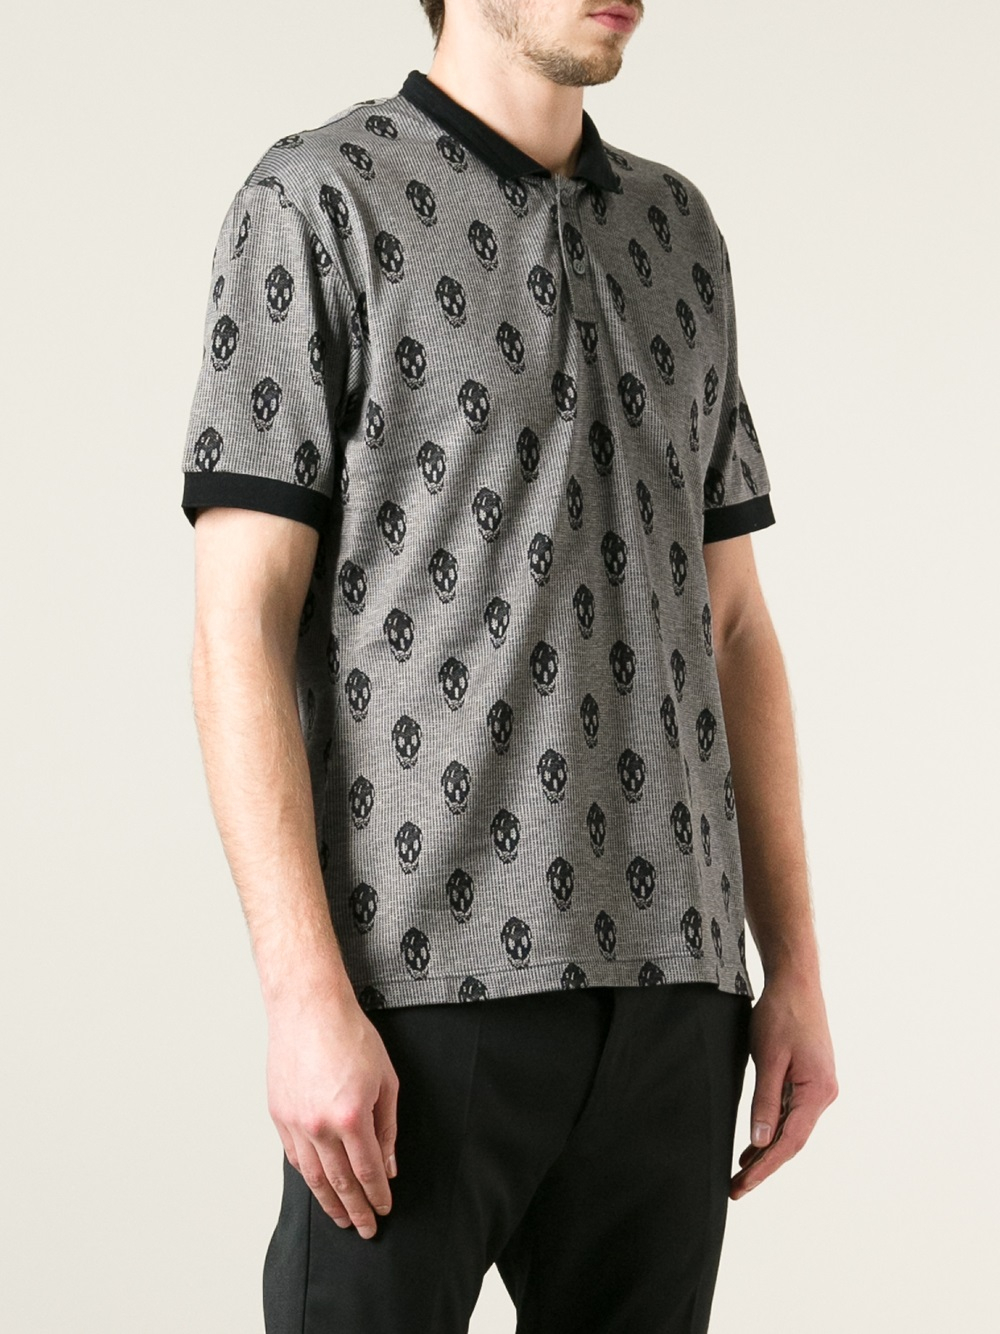 Alexander McQueen Pique Skull Polo Shirt in Grey (Gray) for Men - Lyst